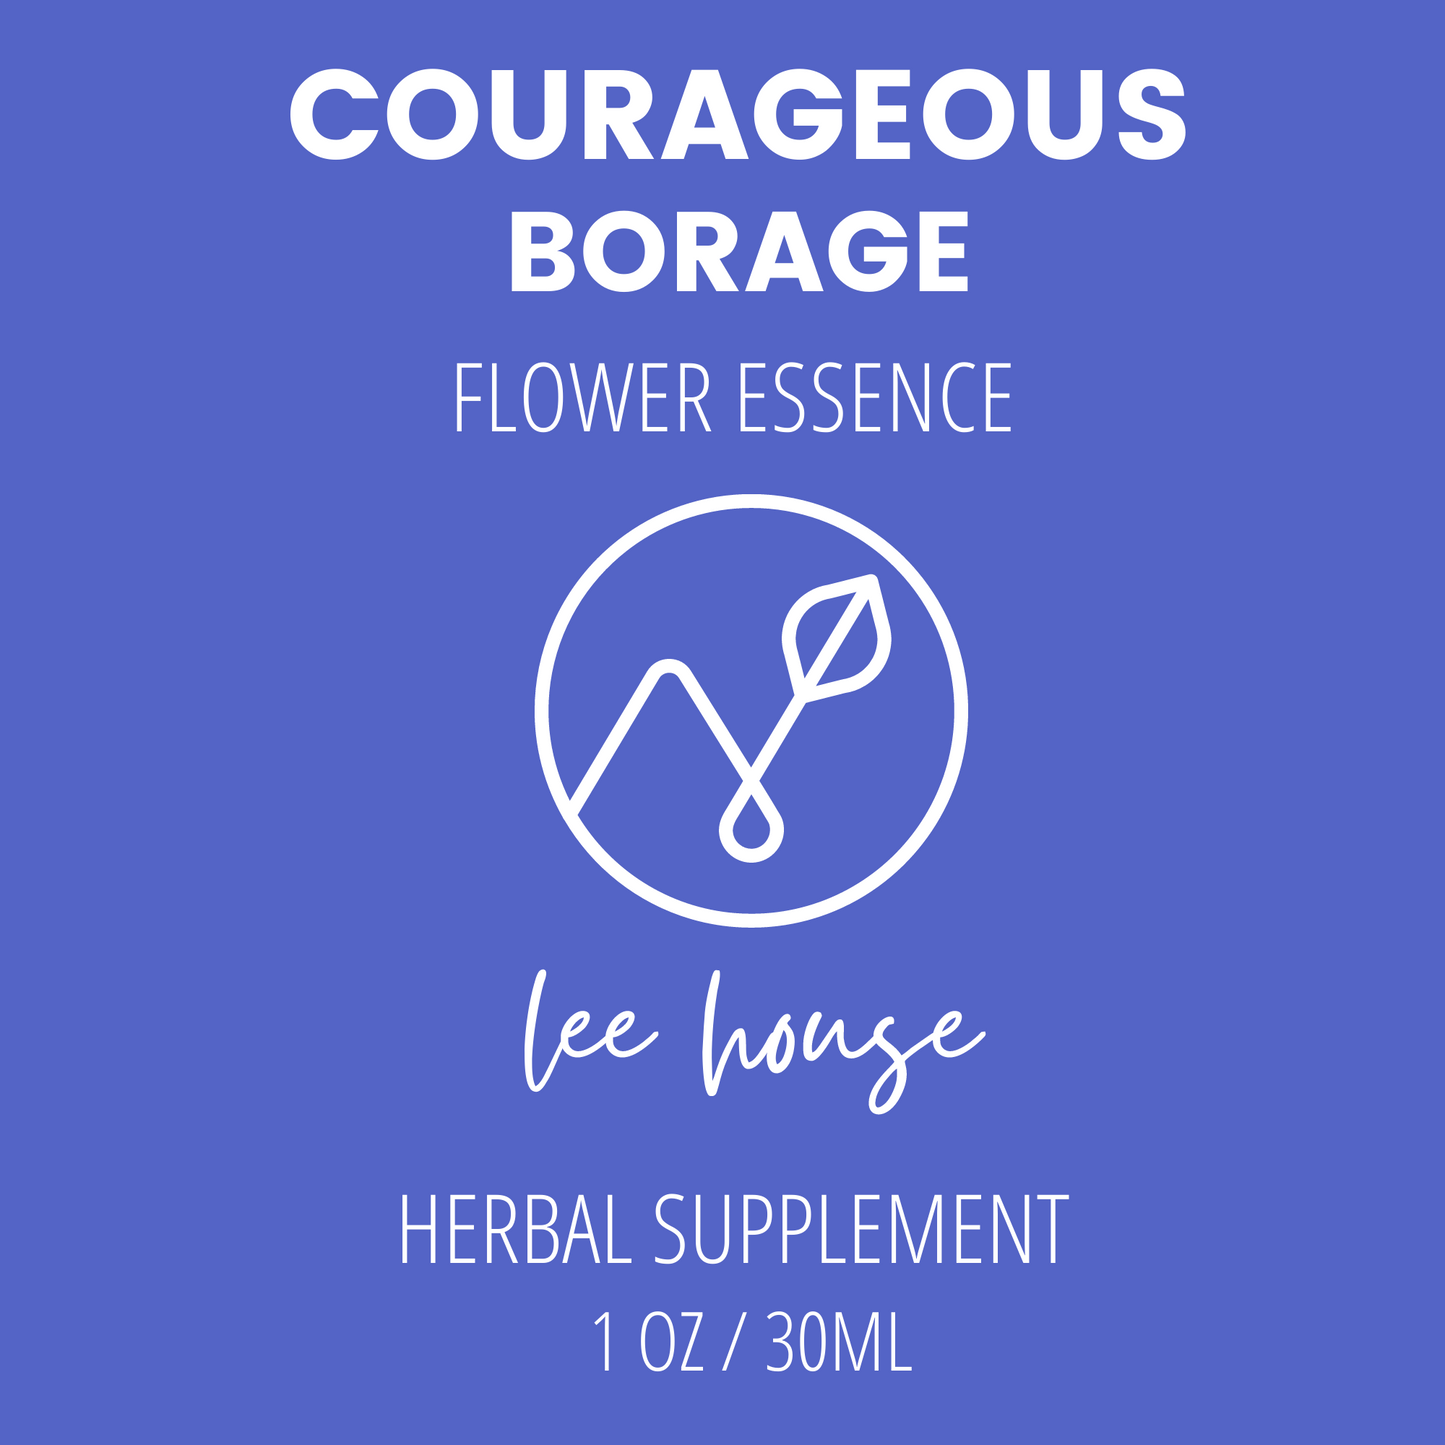 Courageous: Borage Flower Essence